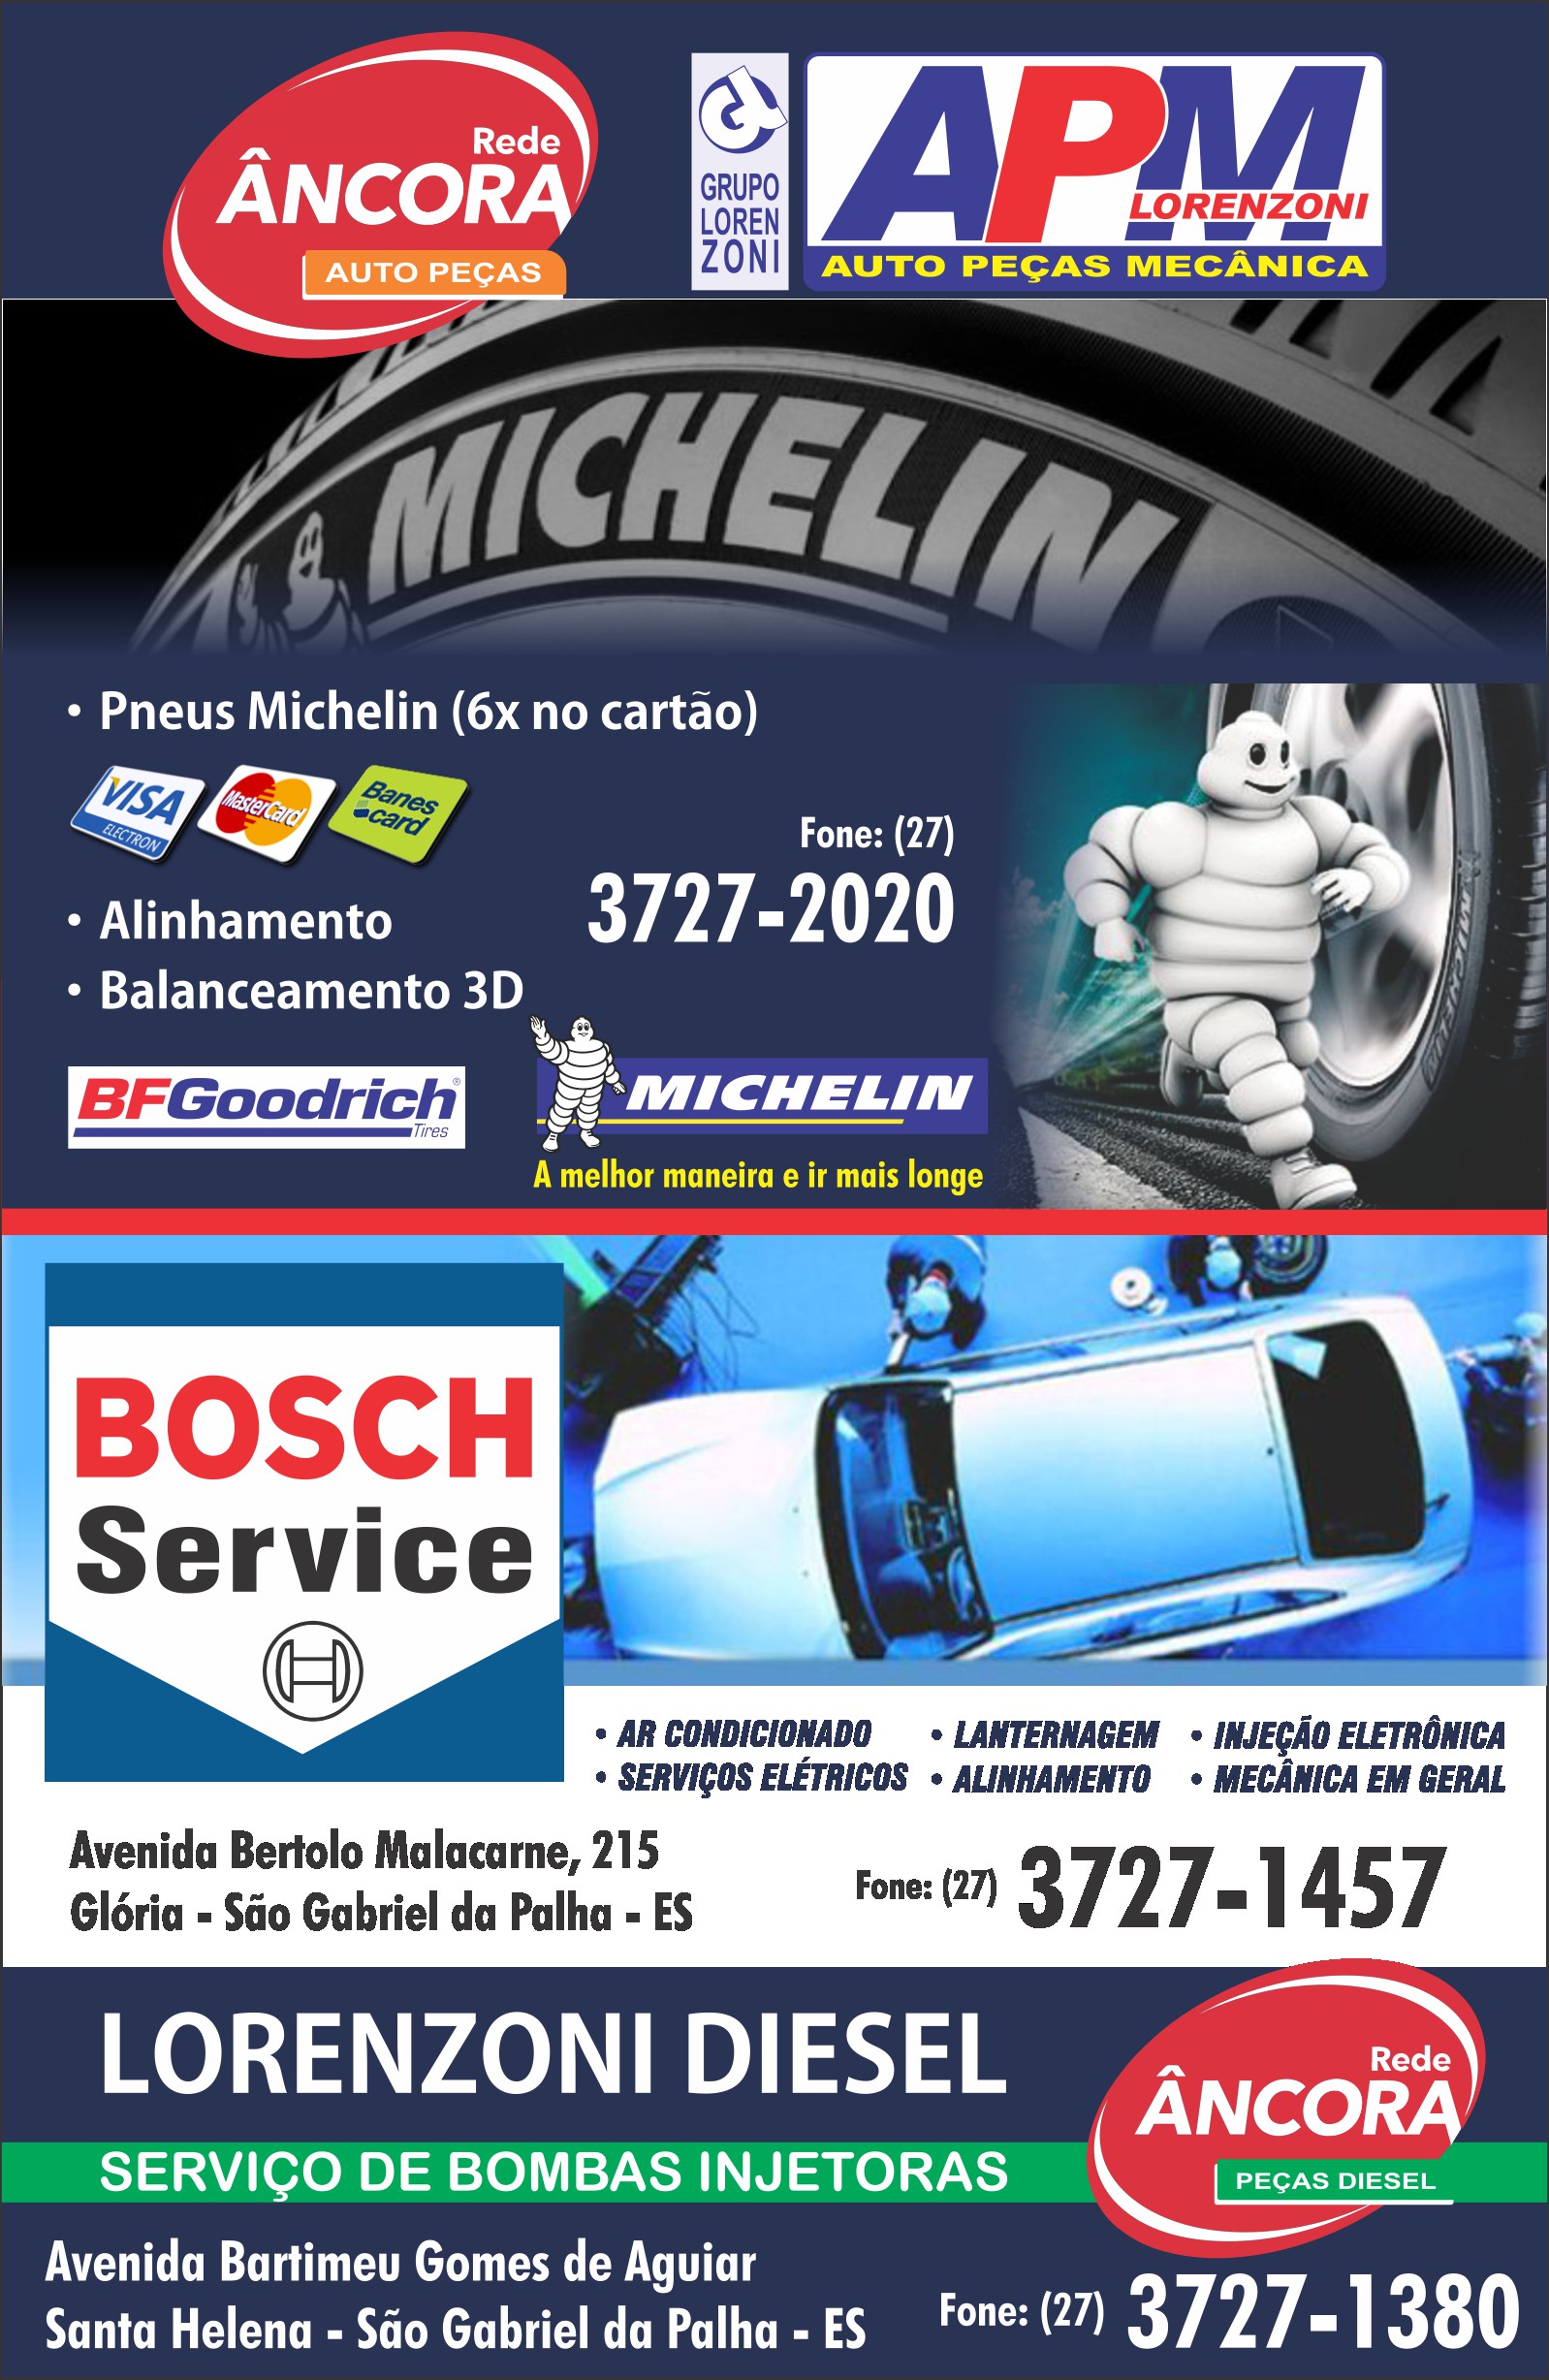 Michelin Pneus APM Lorenzoni